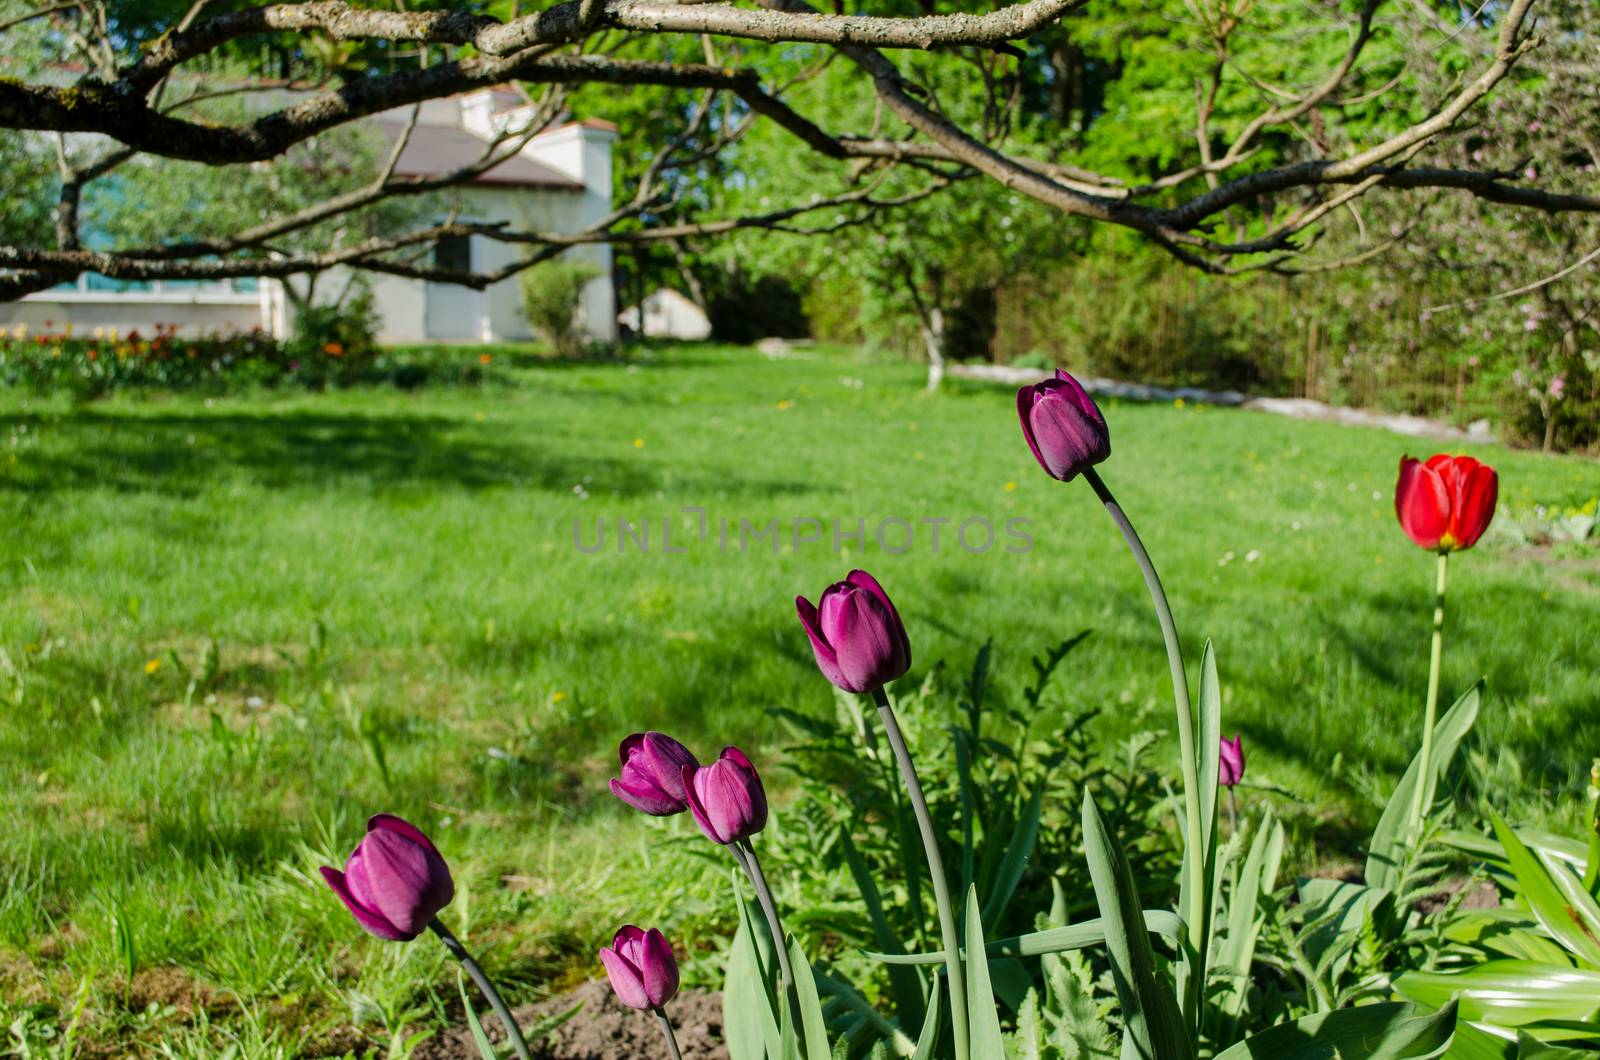 dark purple decorative garden tulips in the shade of trees